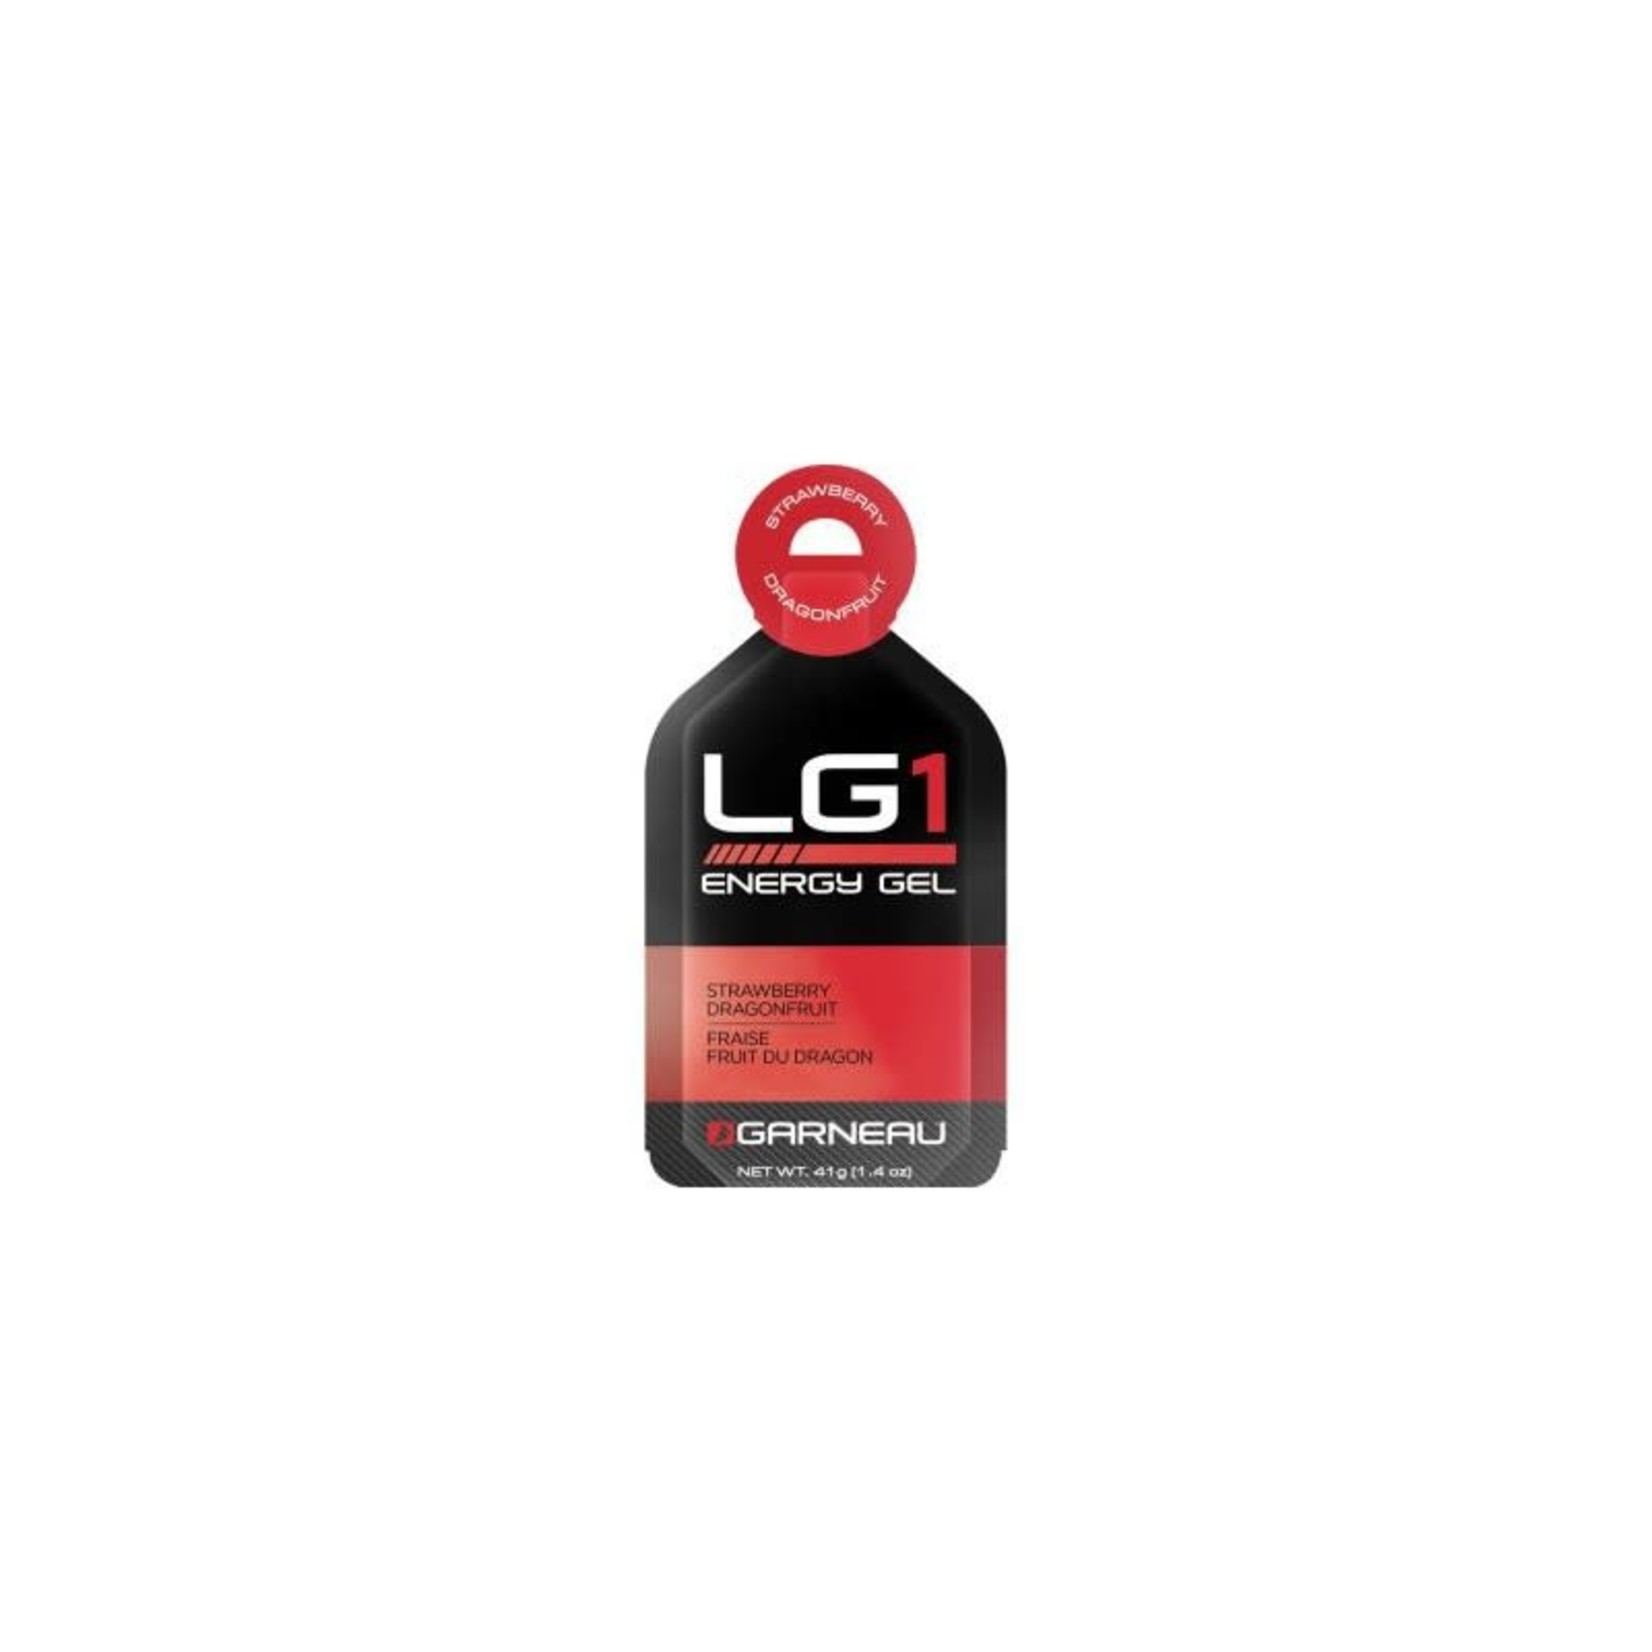 LG1 ENERGY GEL - STRAWBERRY/DRAGONFRUIT single